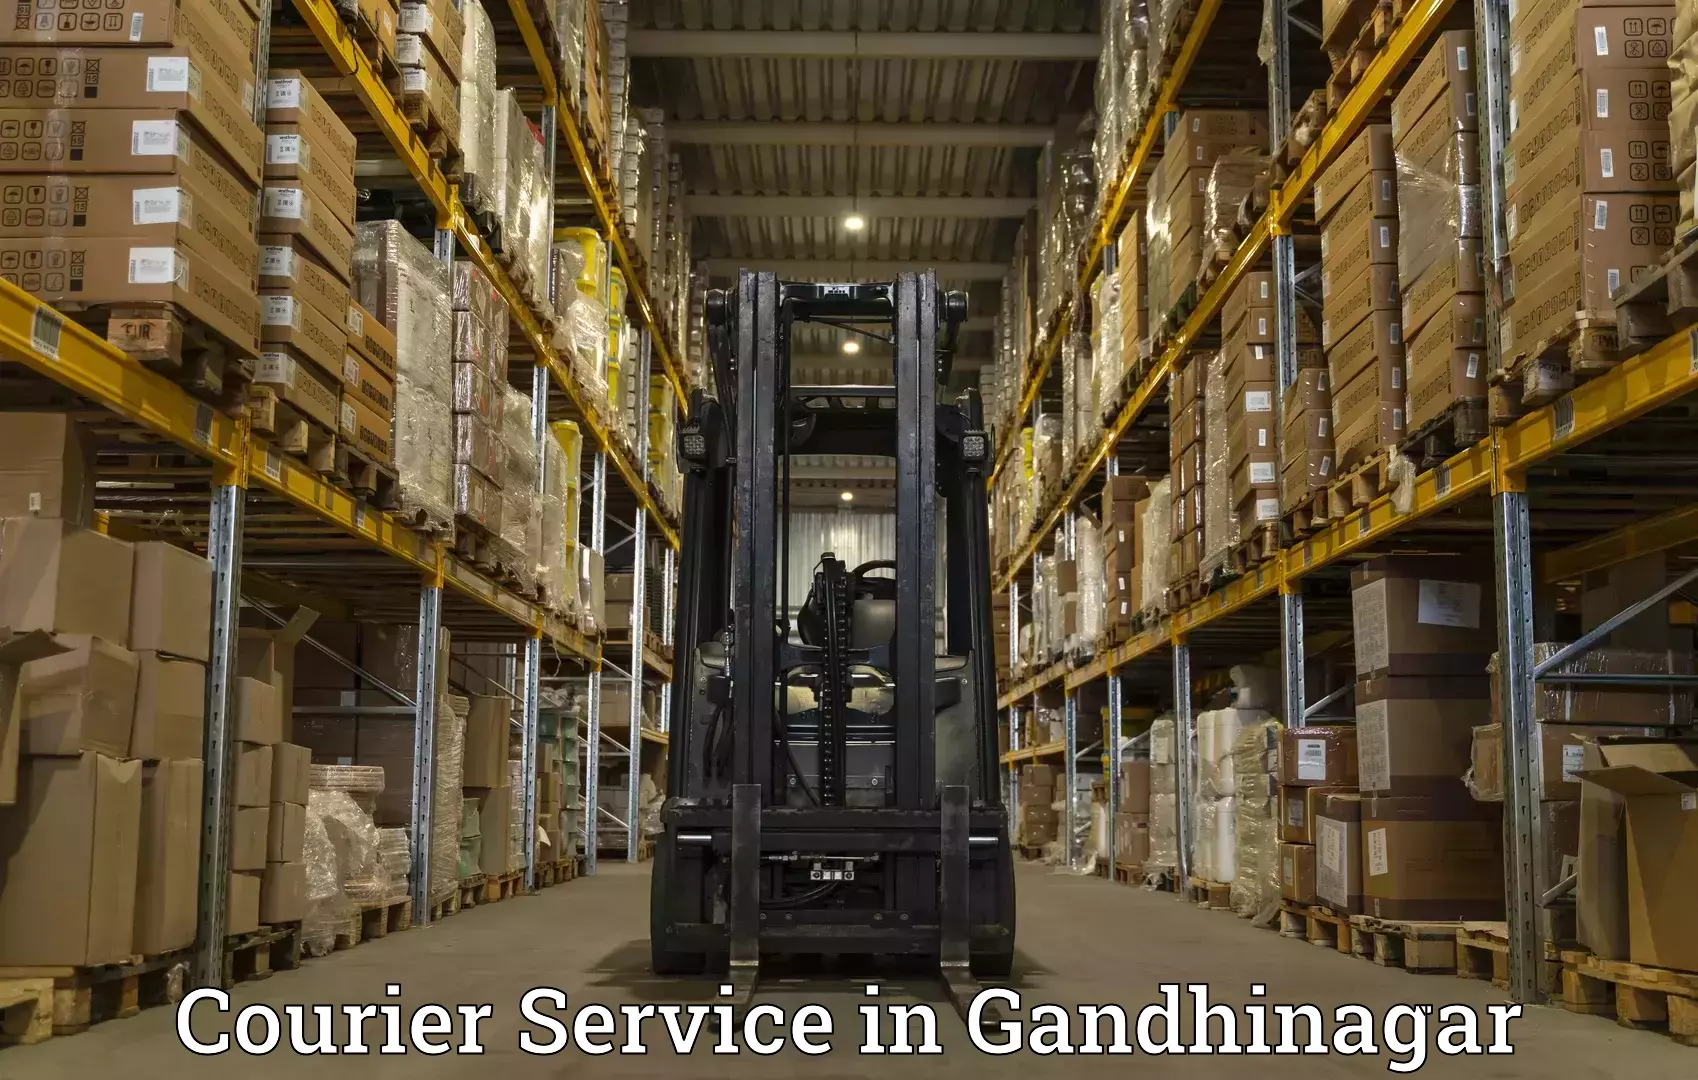 Business delivery service in Gandhinagar